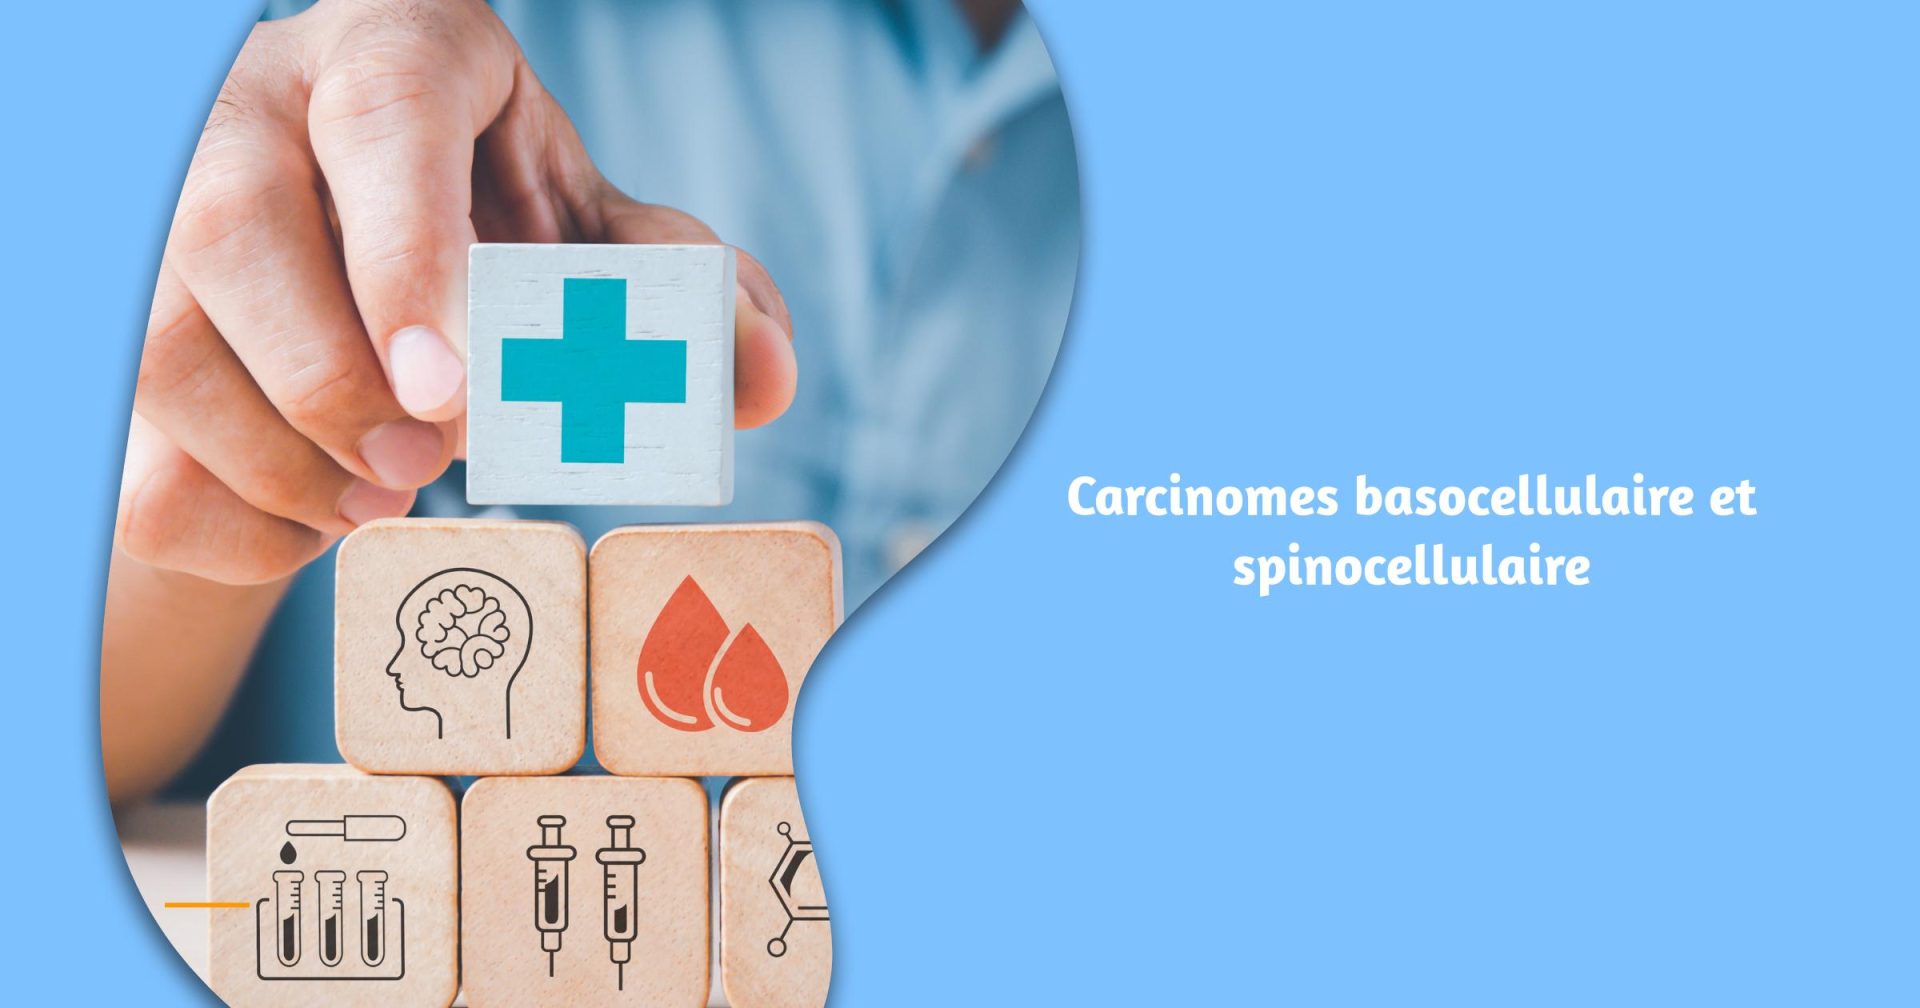 Carcinomes basocellulaire et spinocellulaire